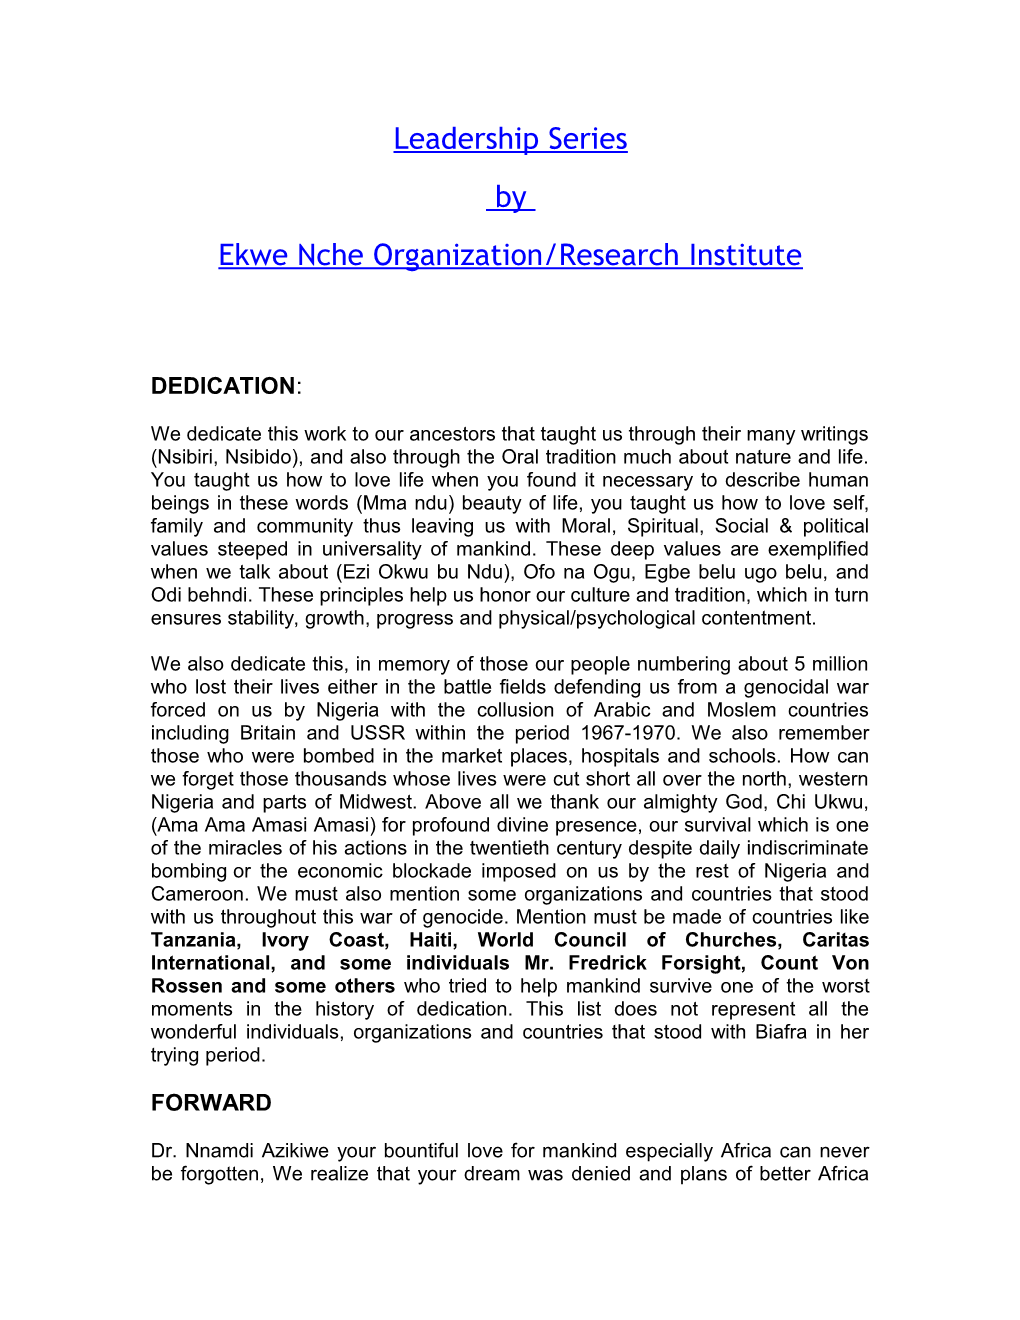 Ekwe Nche Organization/Research Institute